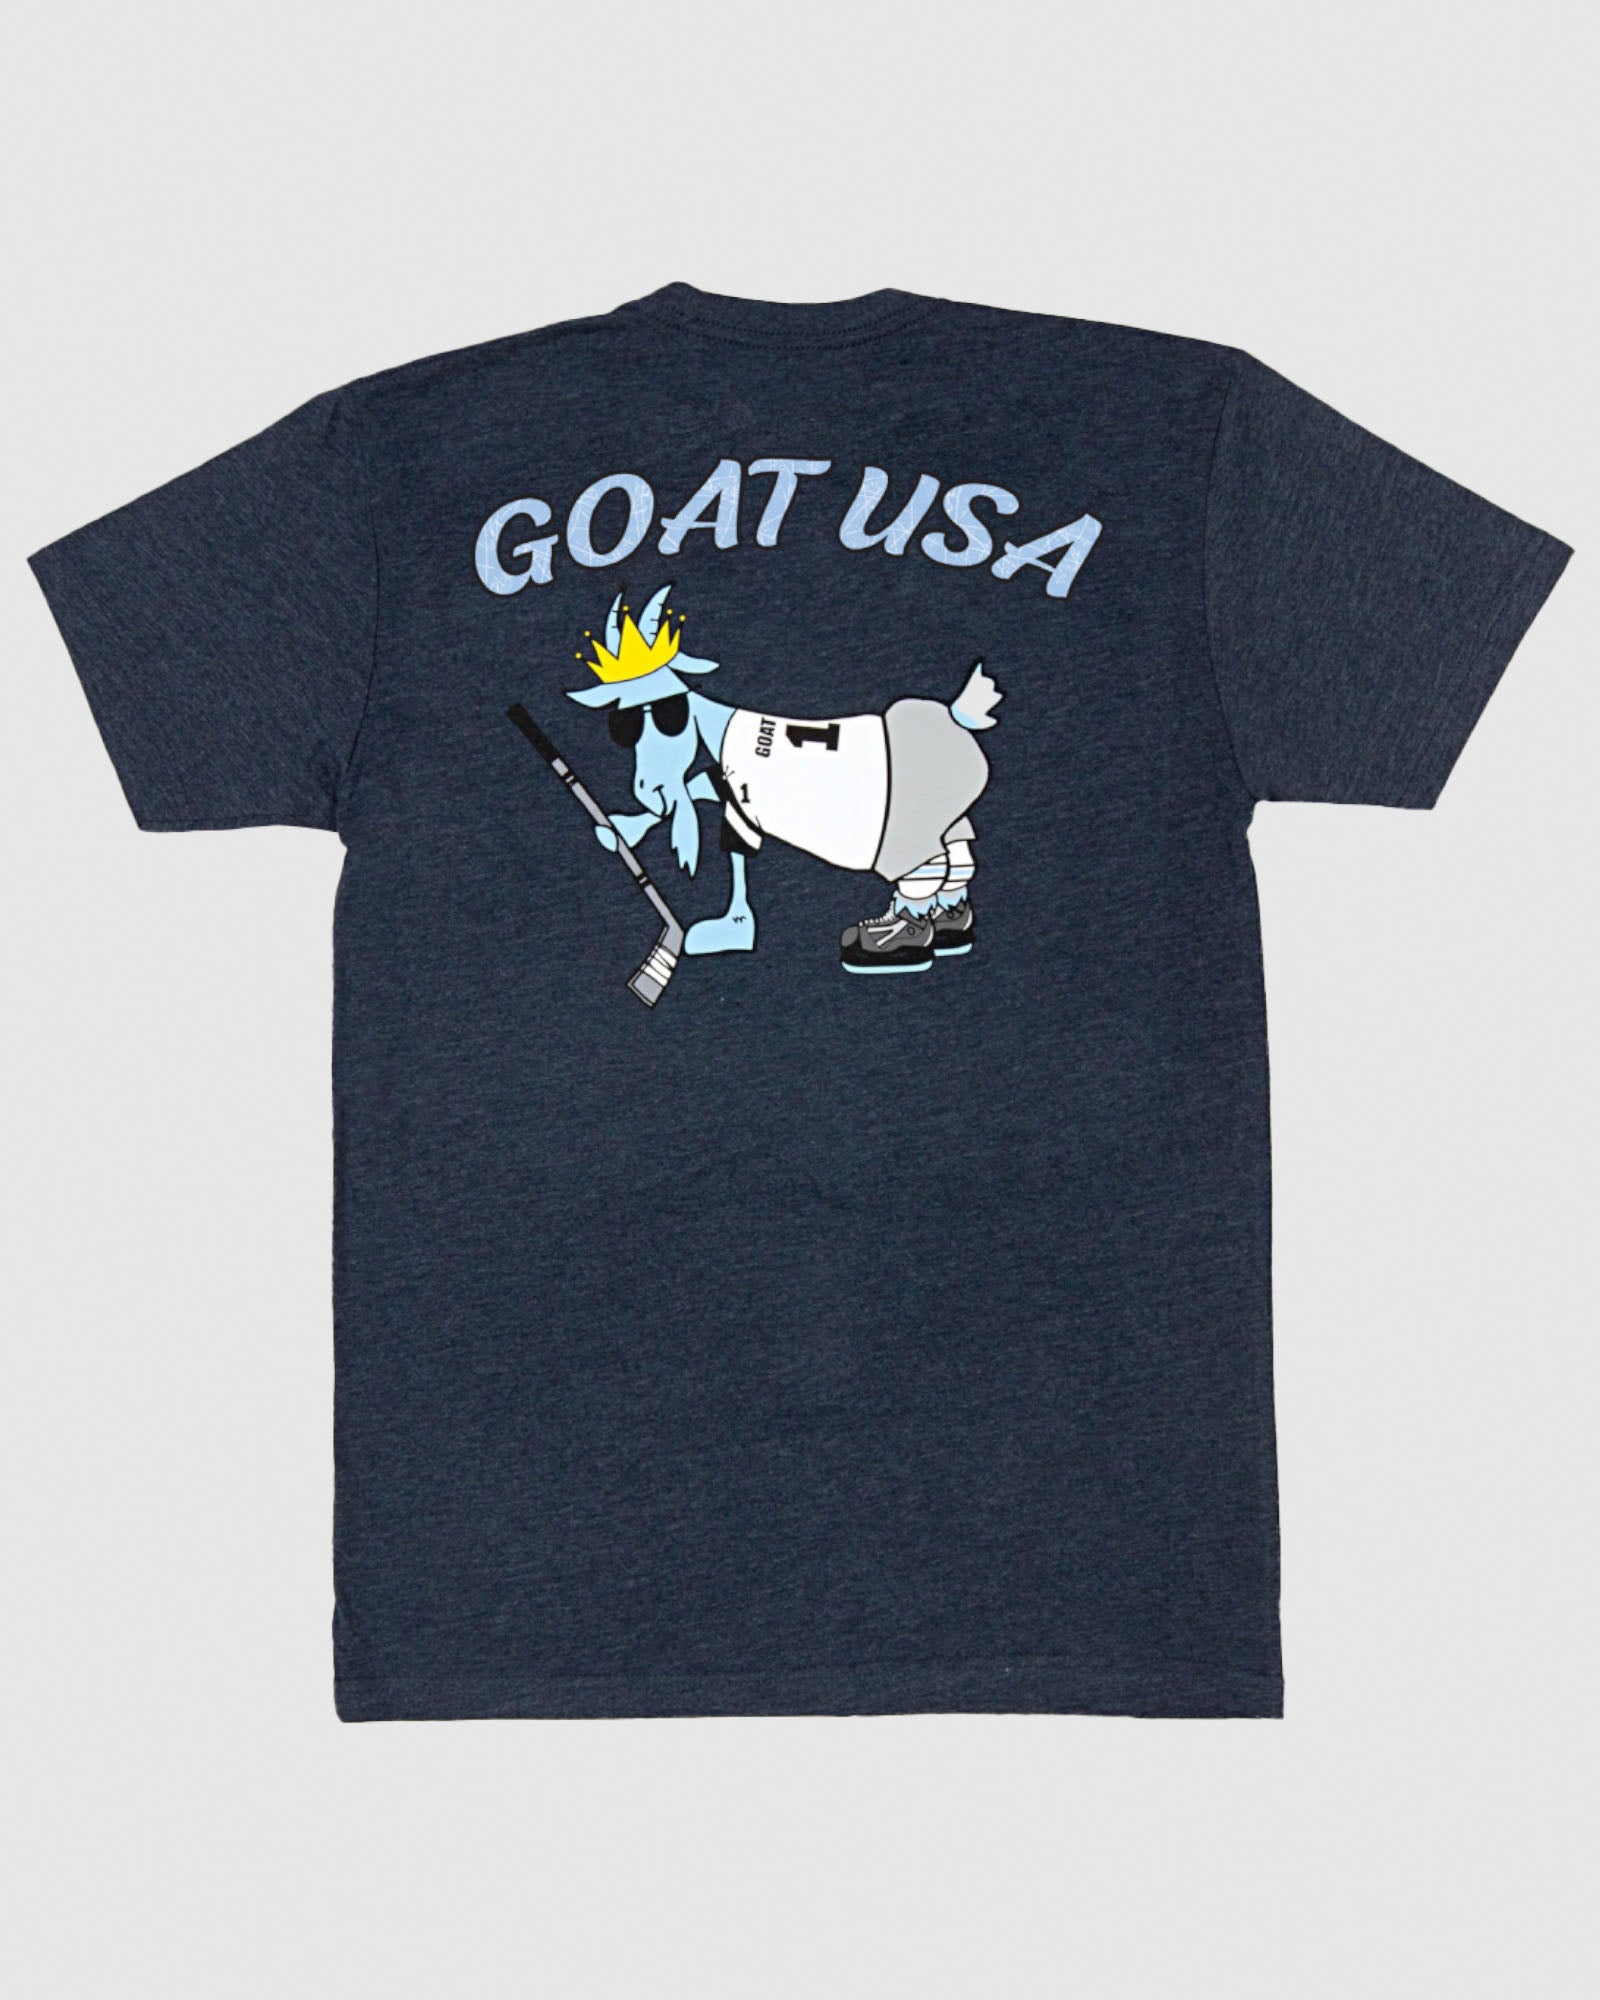 Goat USA Youth Hockey T-Shirt